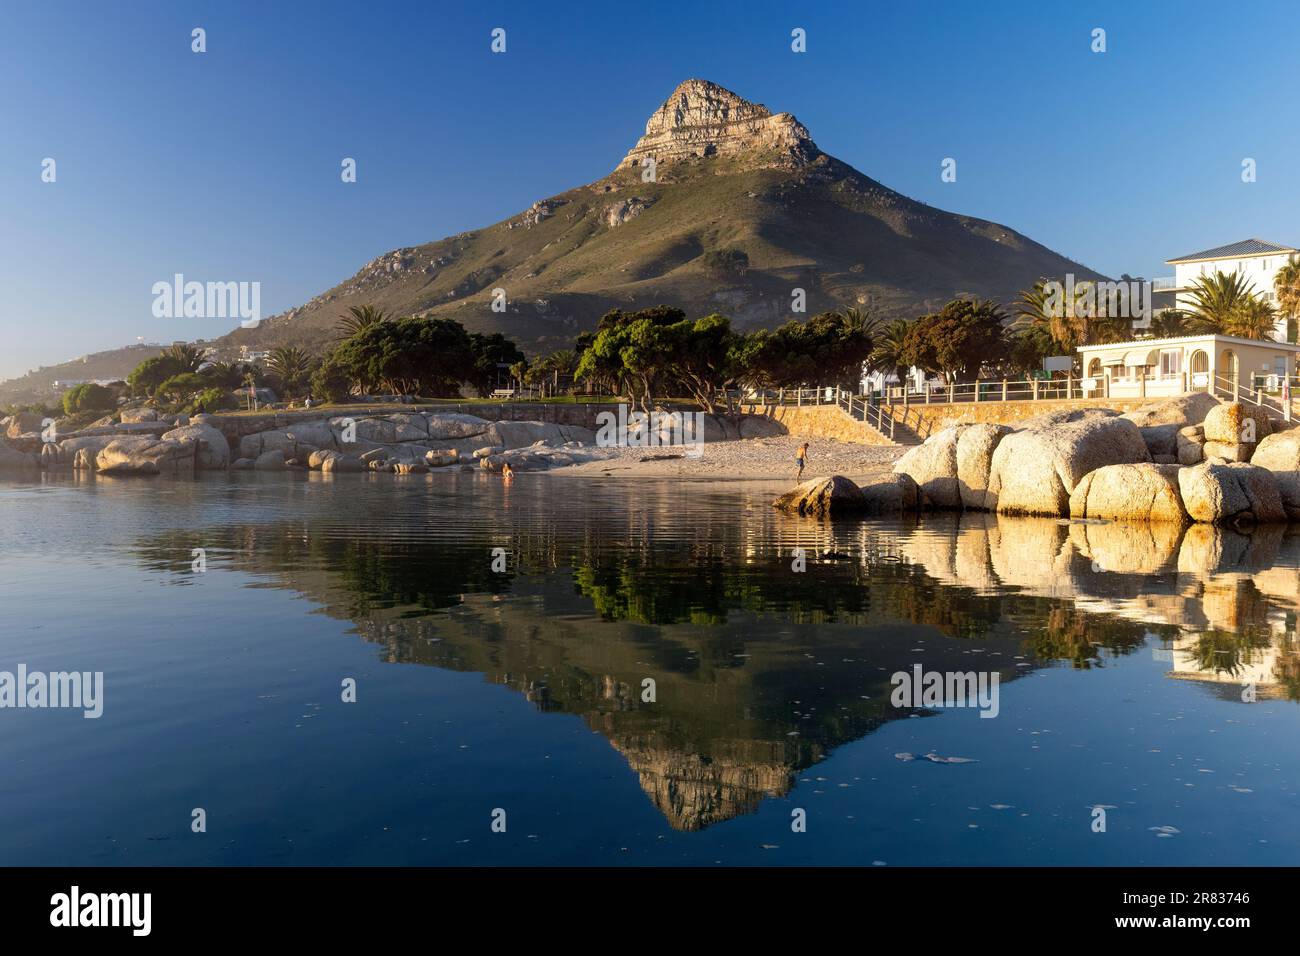 Reflexionen des Lion's Head Mountain in Camps Bay Tidal Pool bei Sonnenuntergang - Camps Bay - Kapstadt, Südafrika Stockfoto